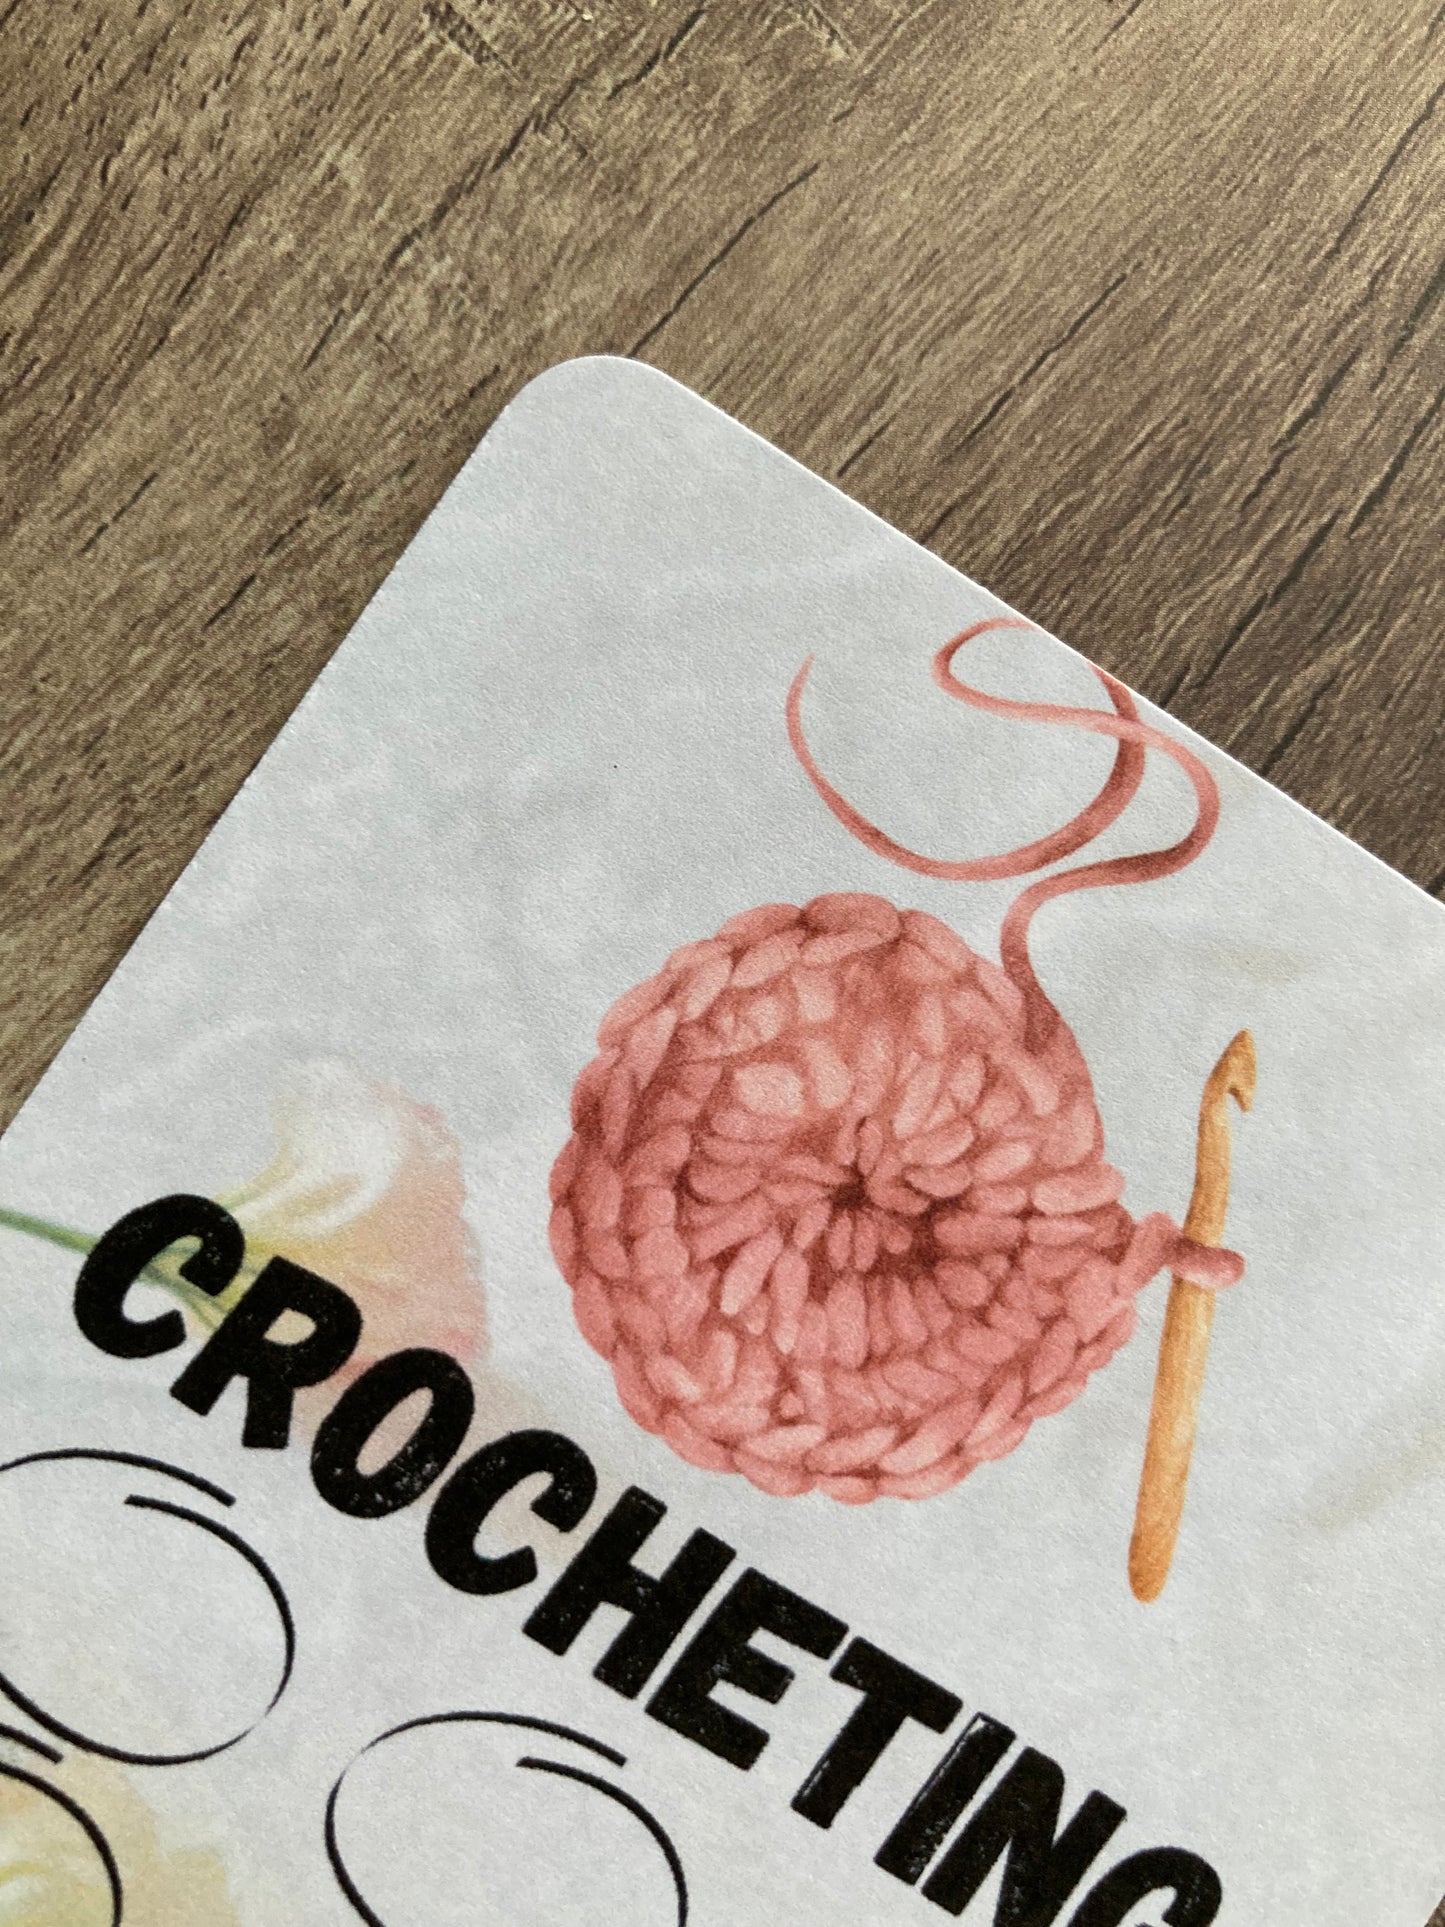 Saving challenge “crocheting”